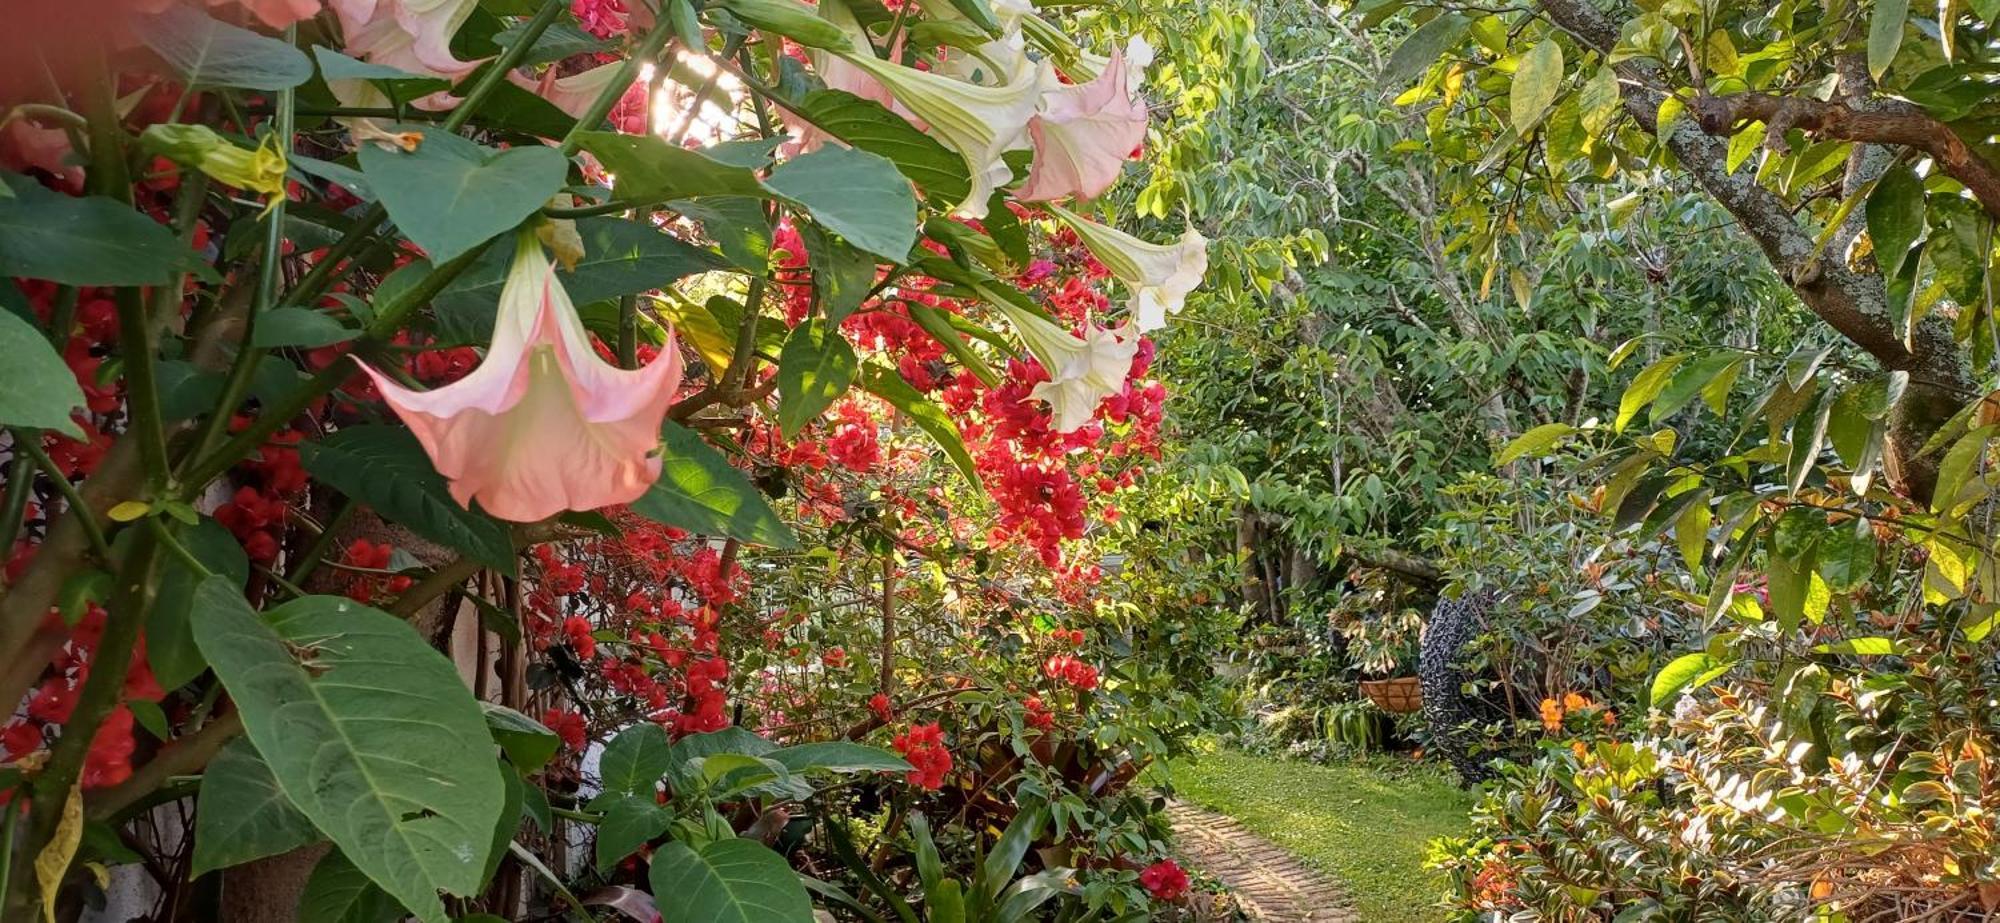 Ashcroft Gardens Bed & Breakfast Napier Extérieur photo